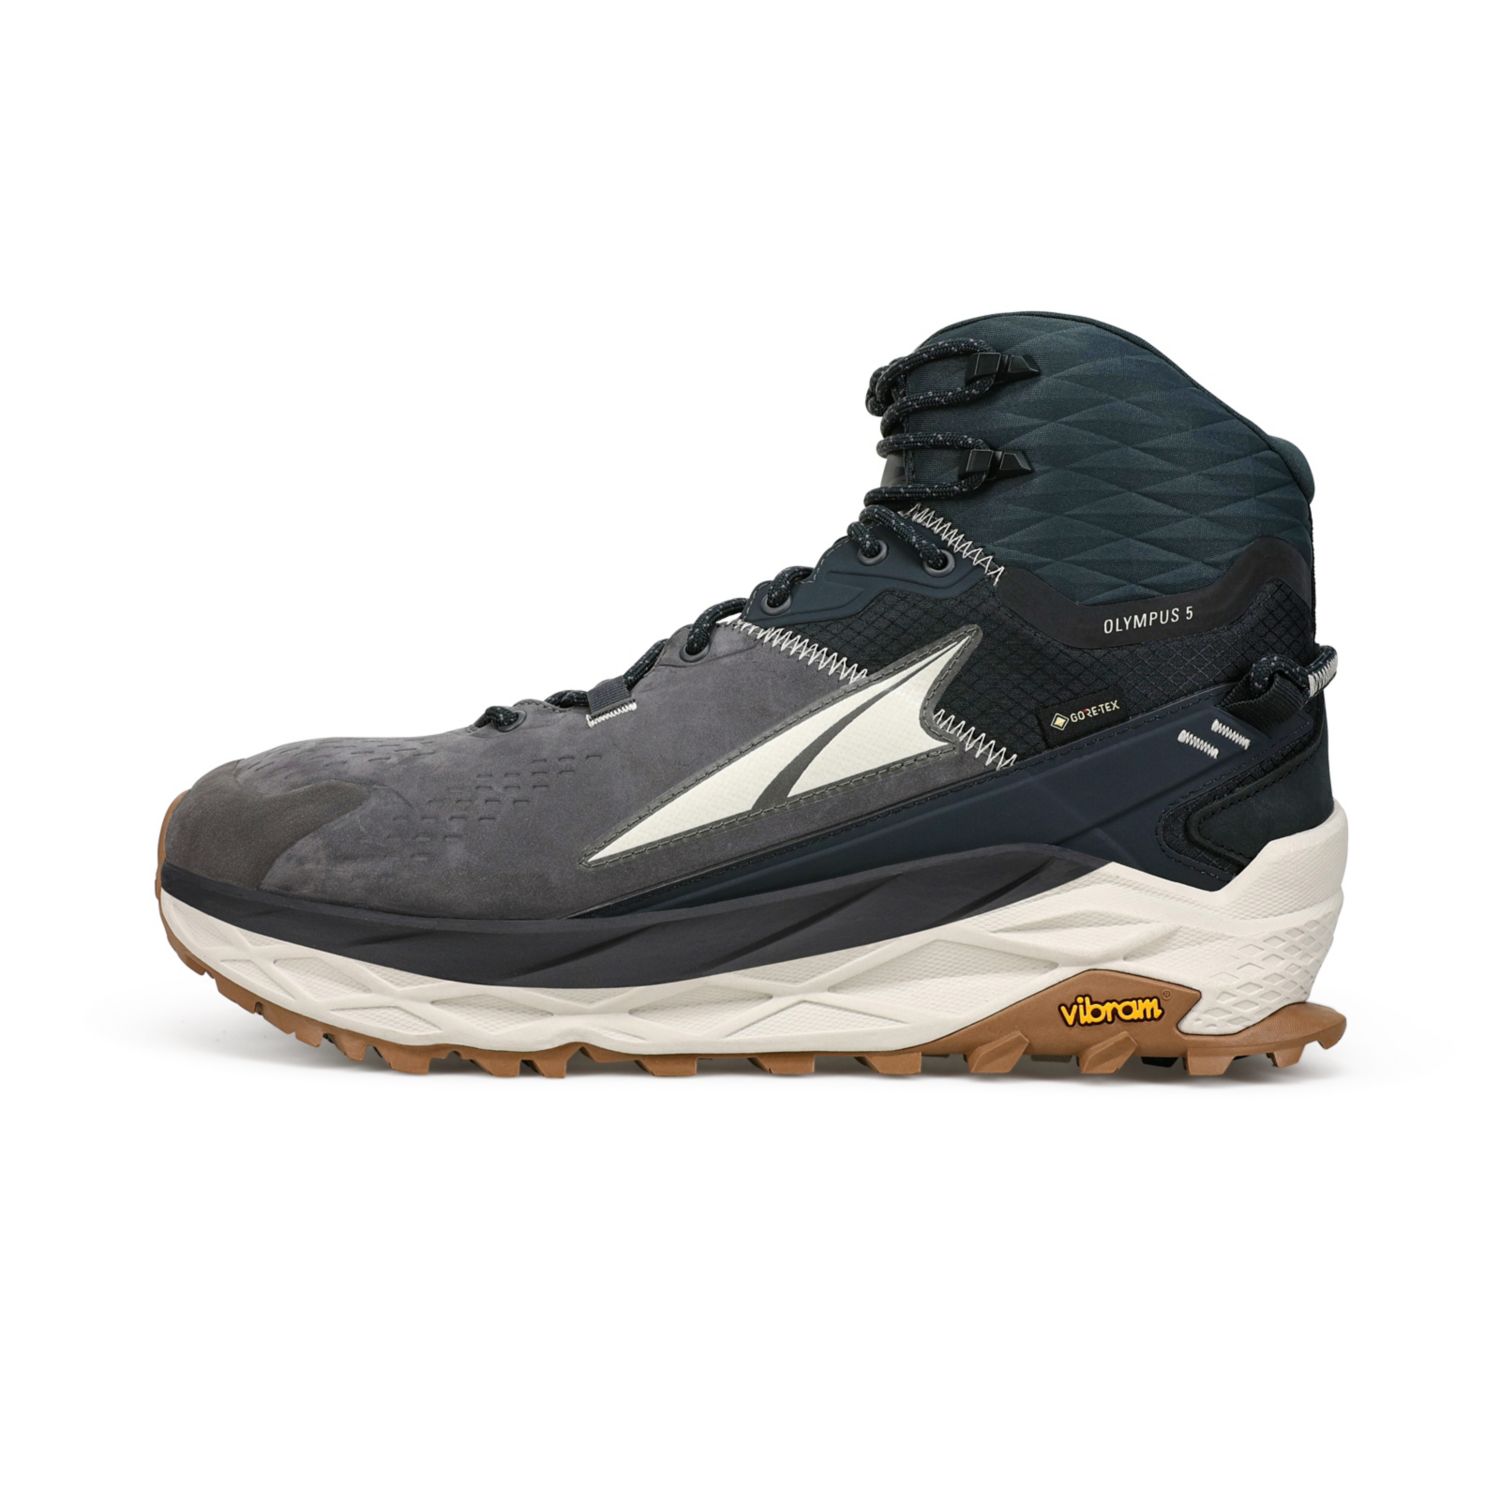 Black / Grey Altra Olympus 5 Hike Mid Gtx Men's Hiking Boots | Ireland-03486959